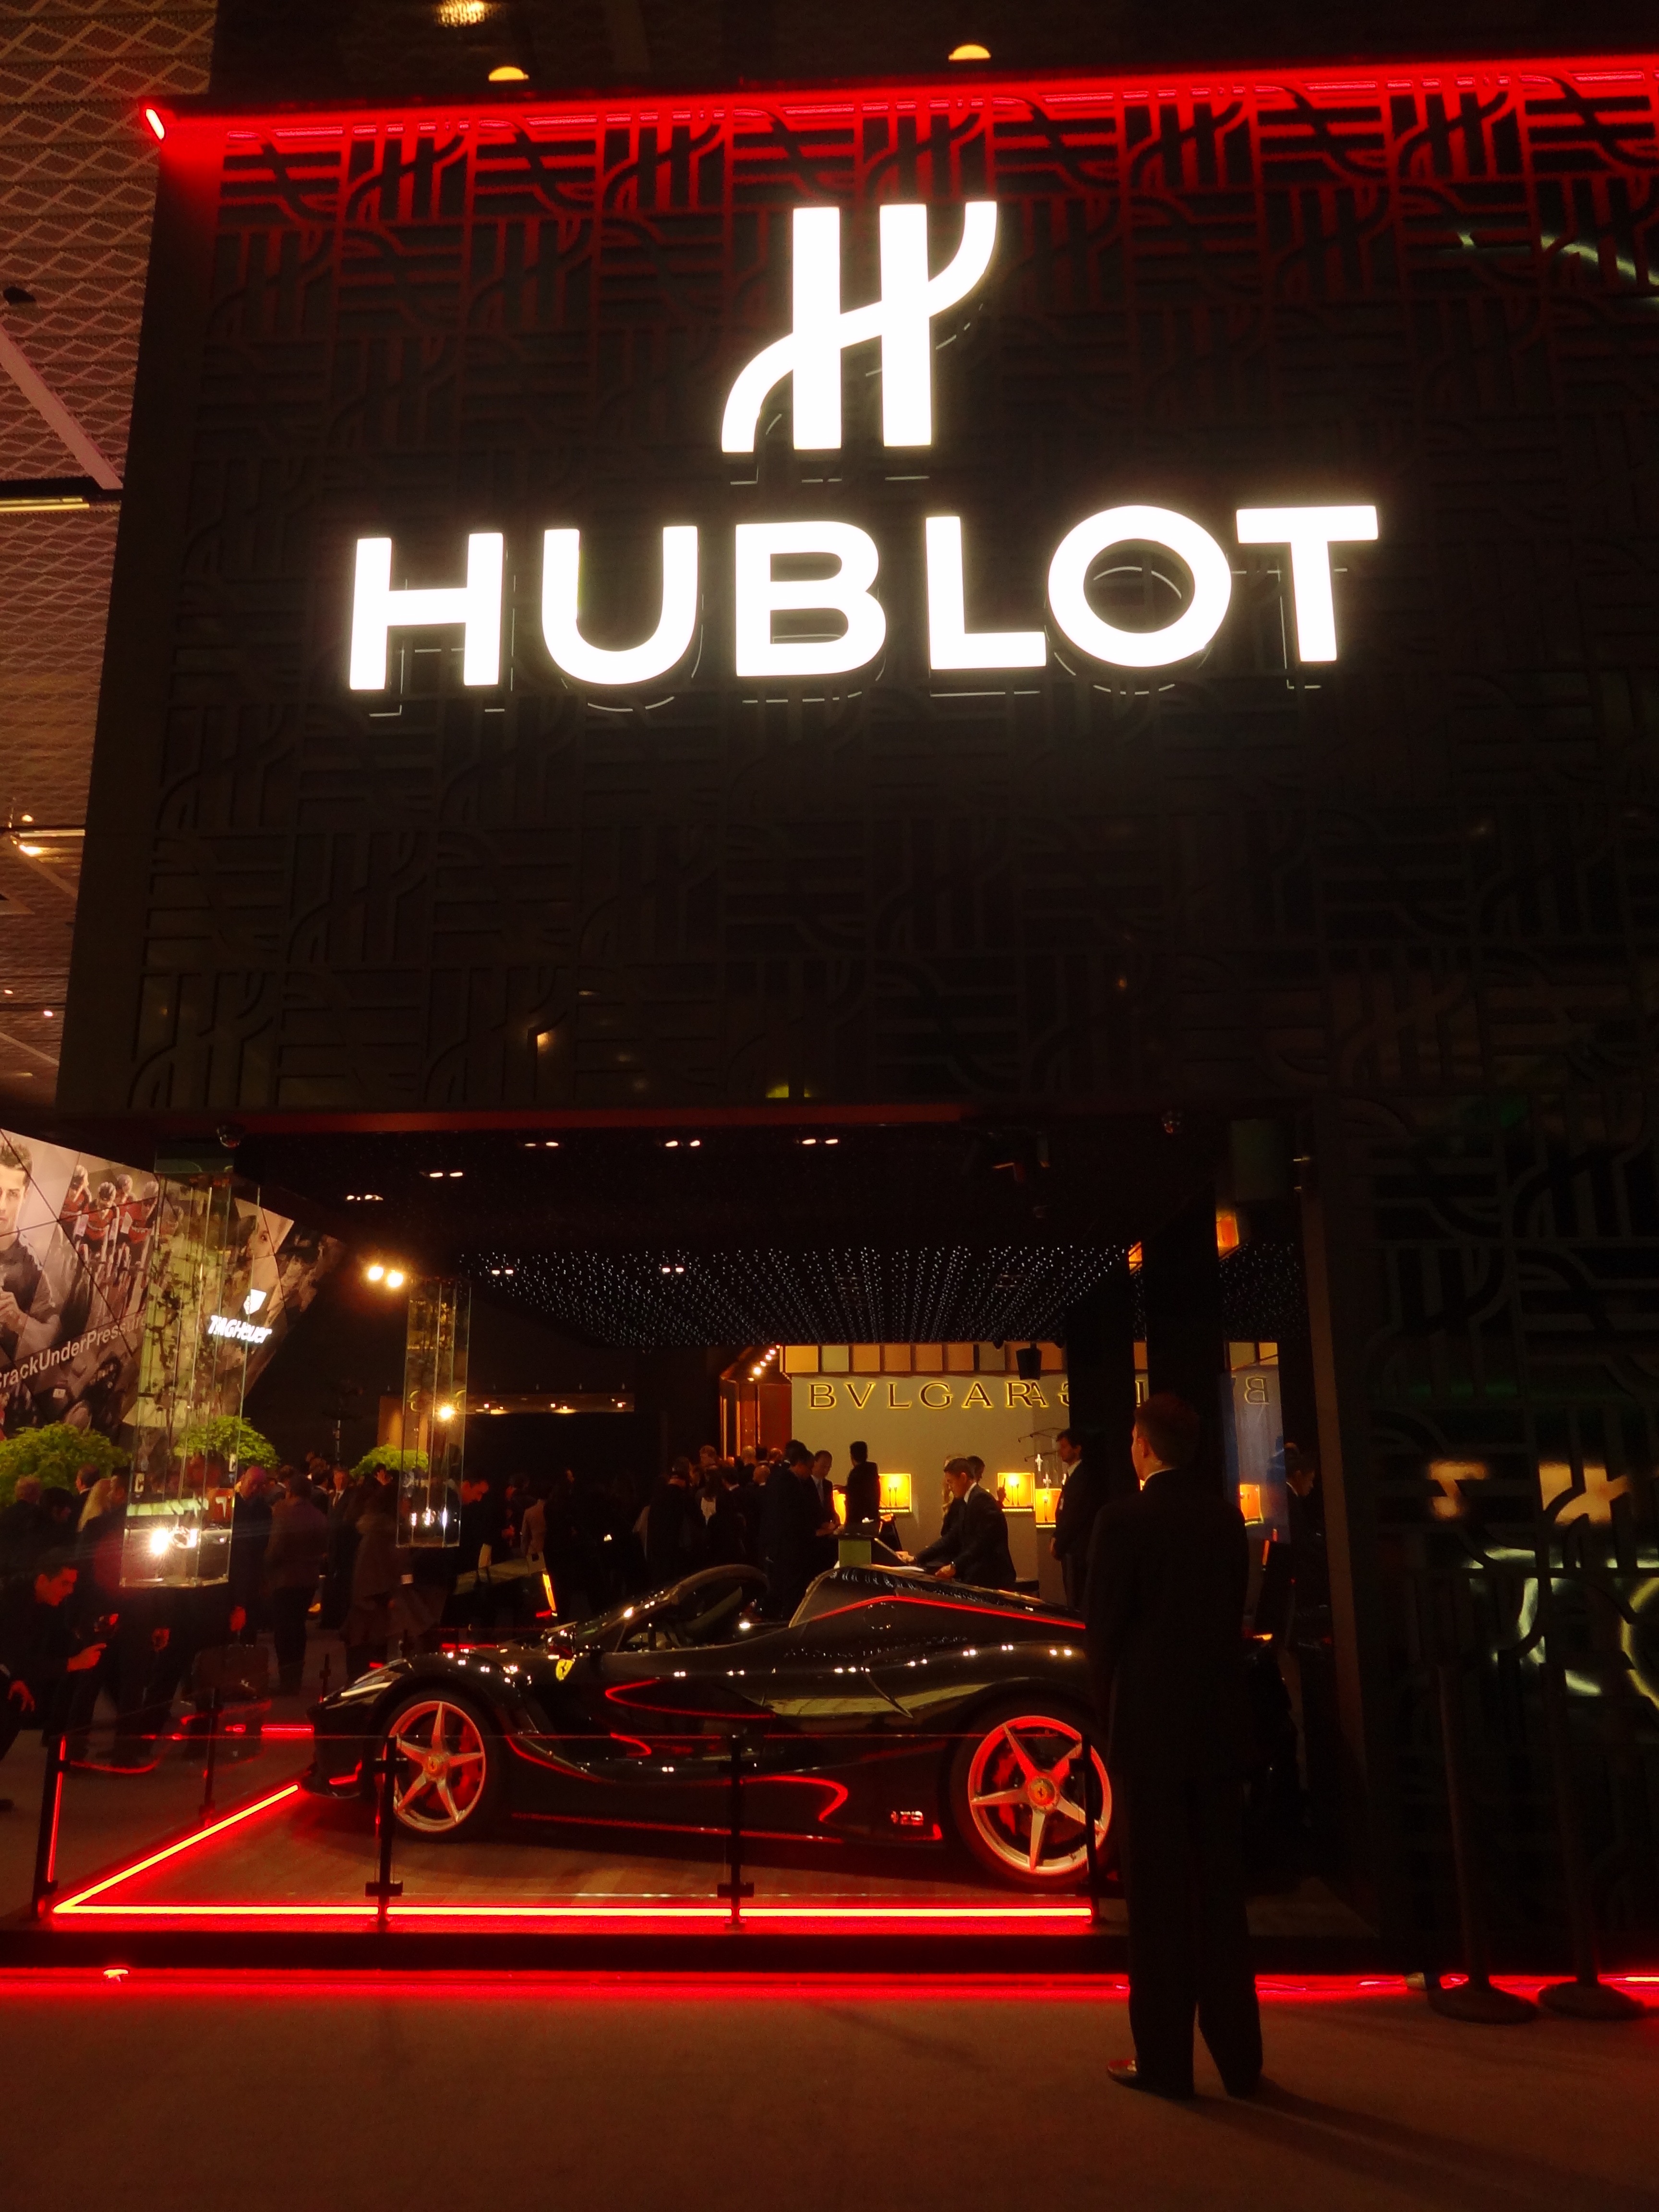 Hublot's display commemorating the 70 years of Ferrari